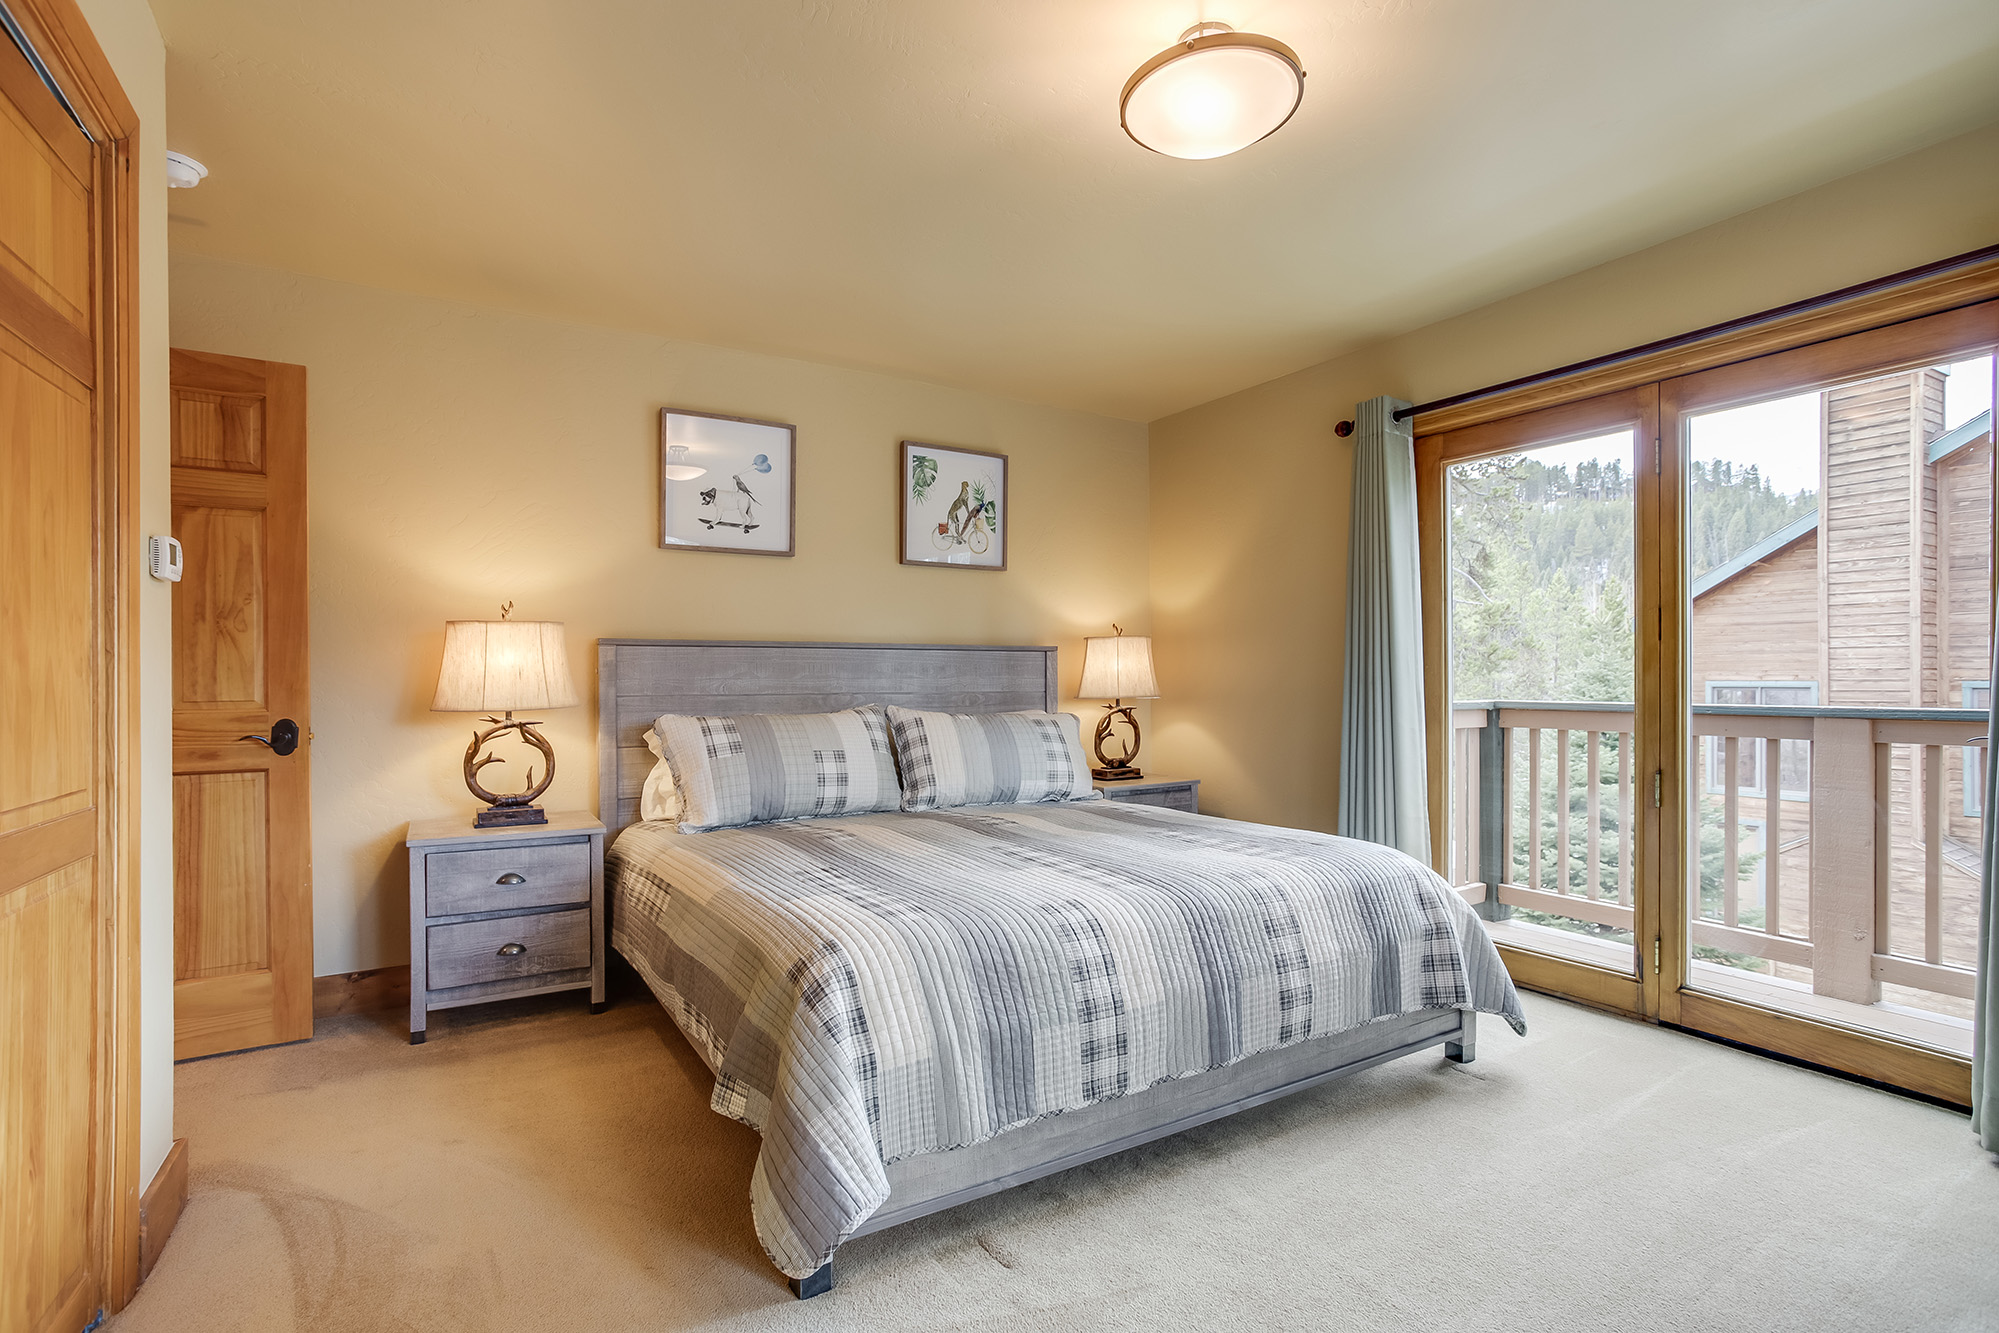 King bedroom with deck - Friendly Fox Chalet - Breckenridge vacation rental